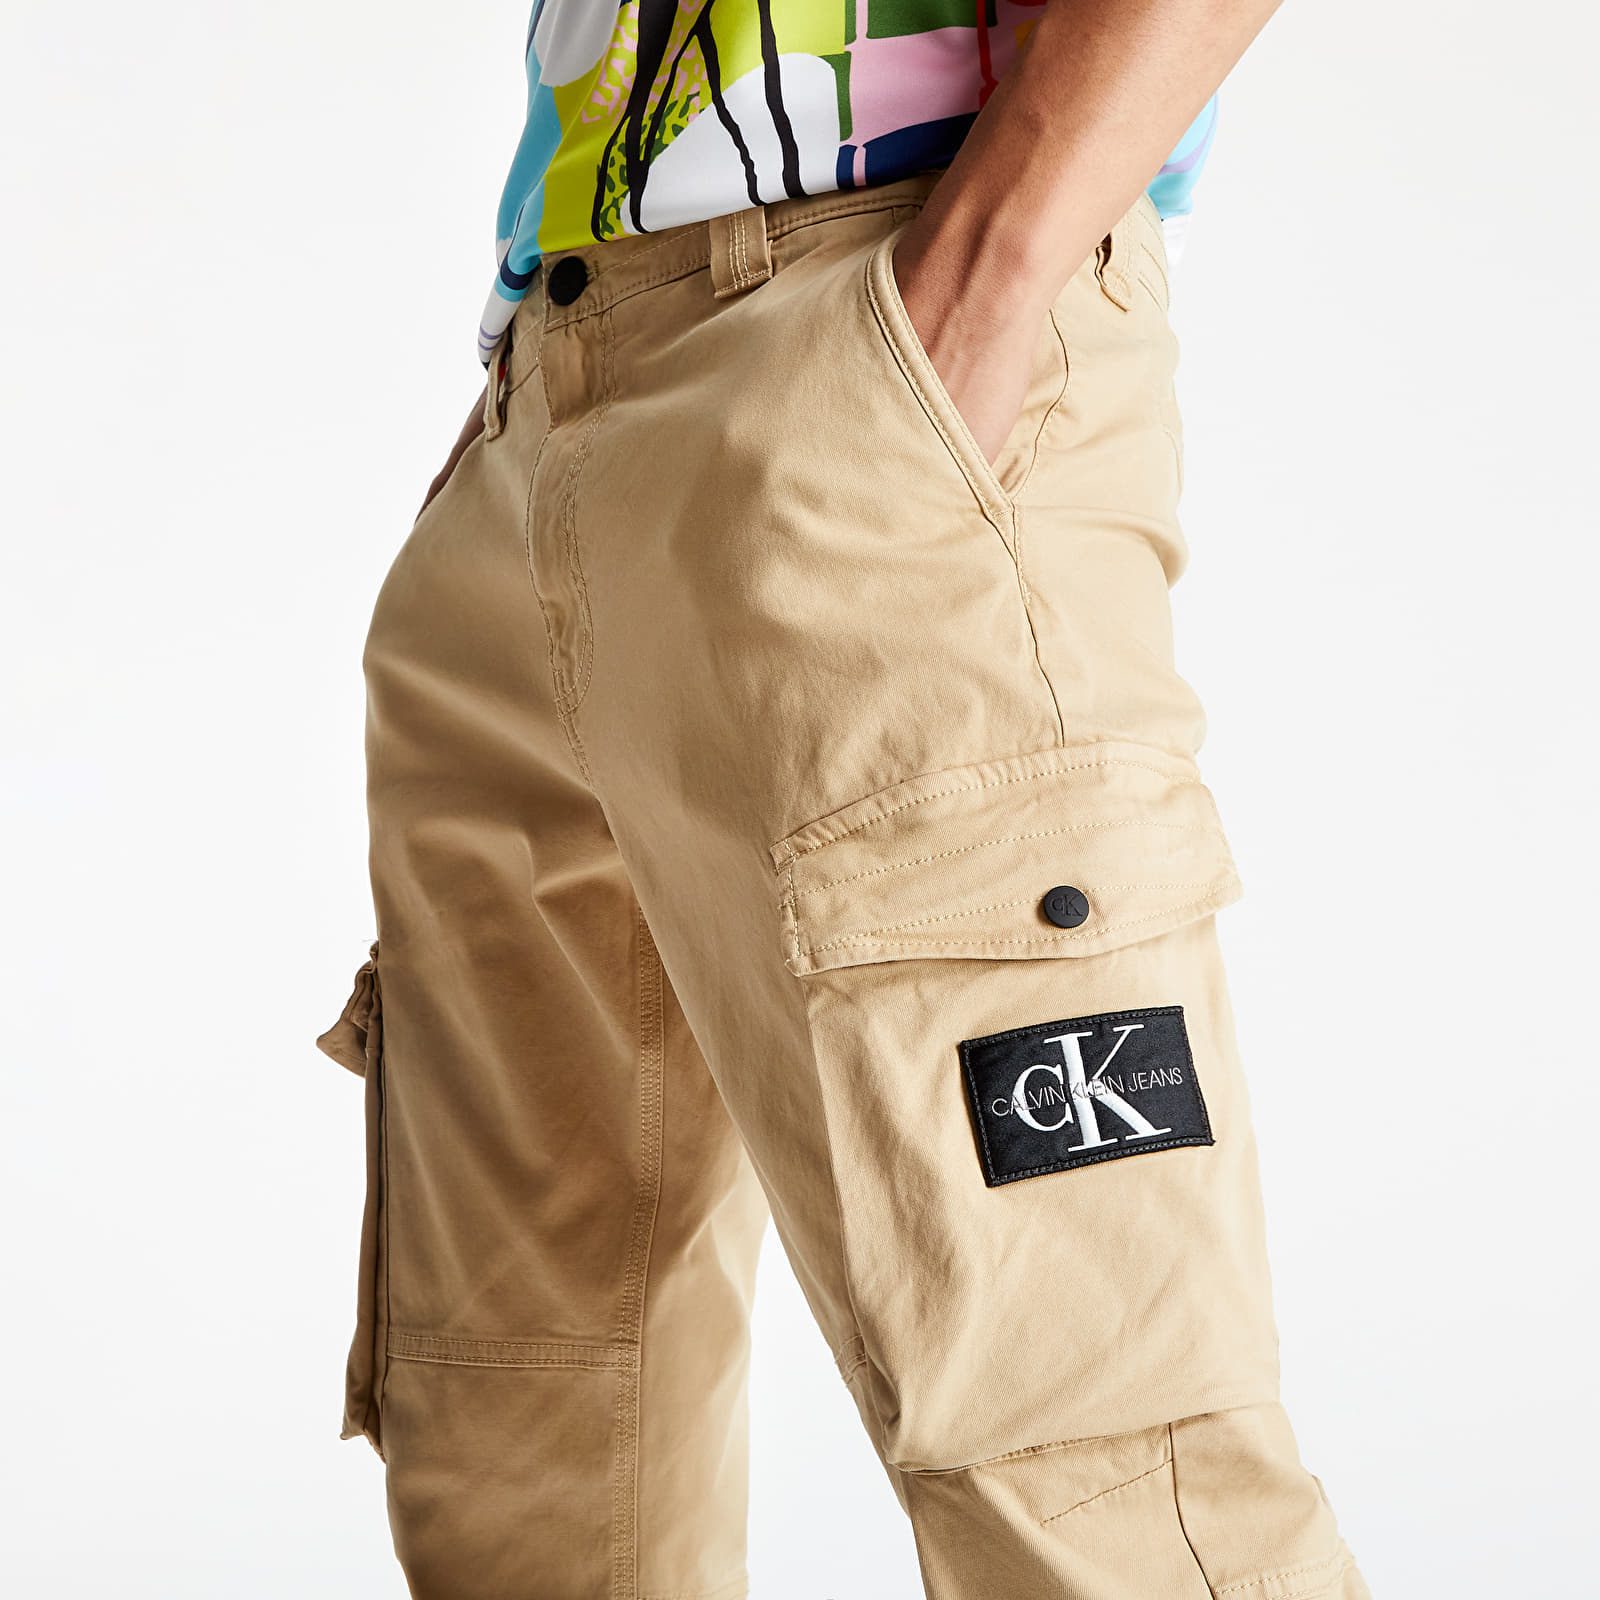 Calvin Klein Cut Offs Cargo Pants for Women | Mercari